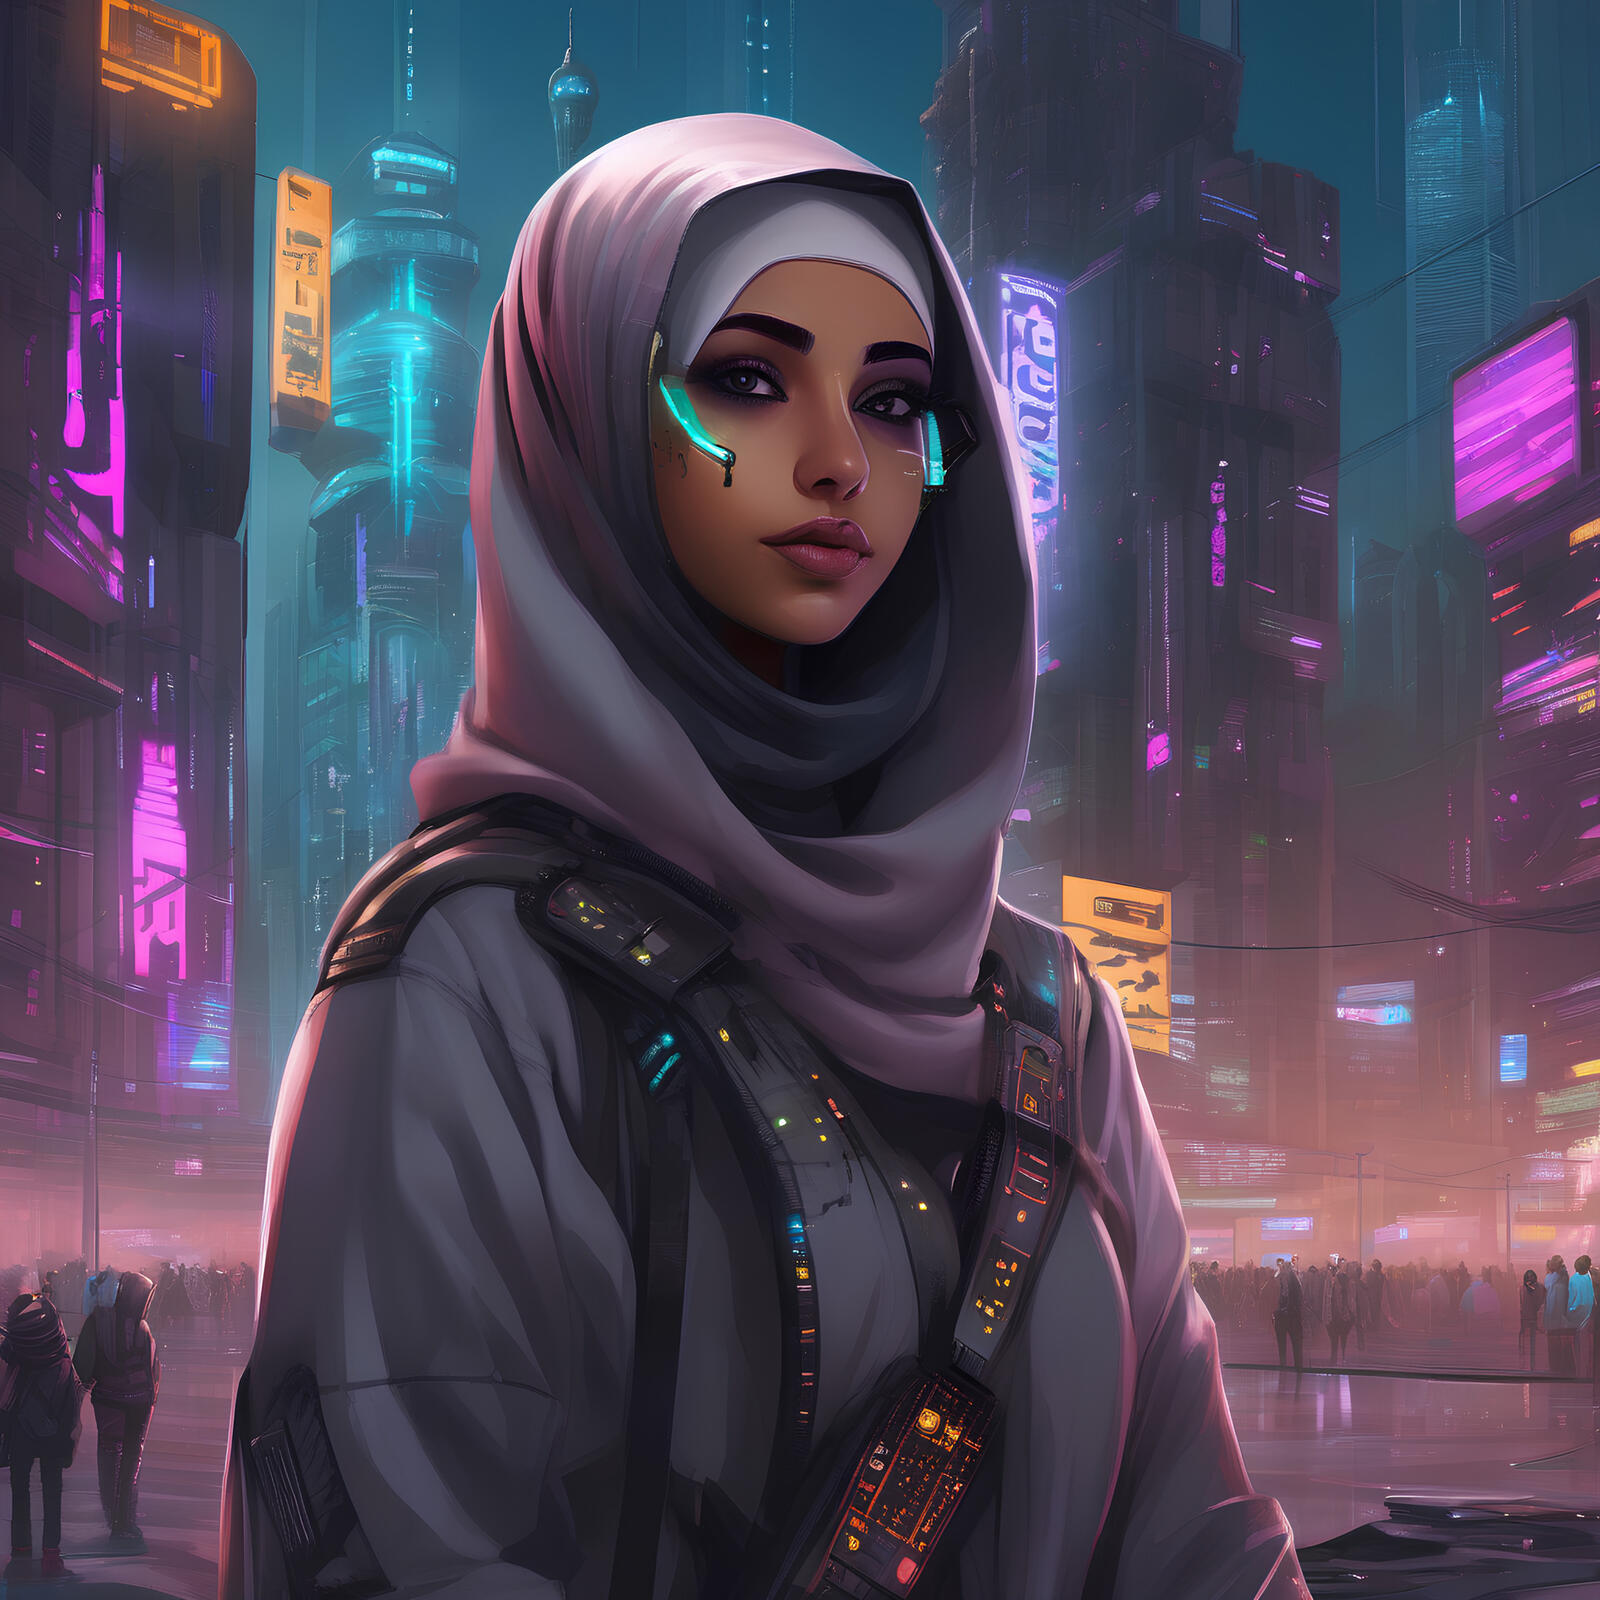 Бесплатное фото Muslim girl cyberpunk